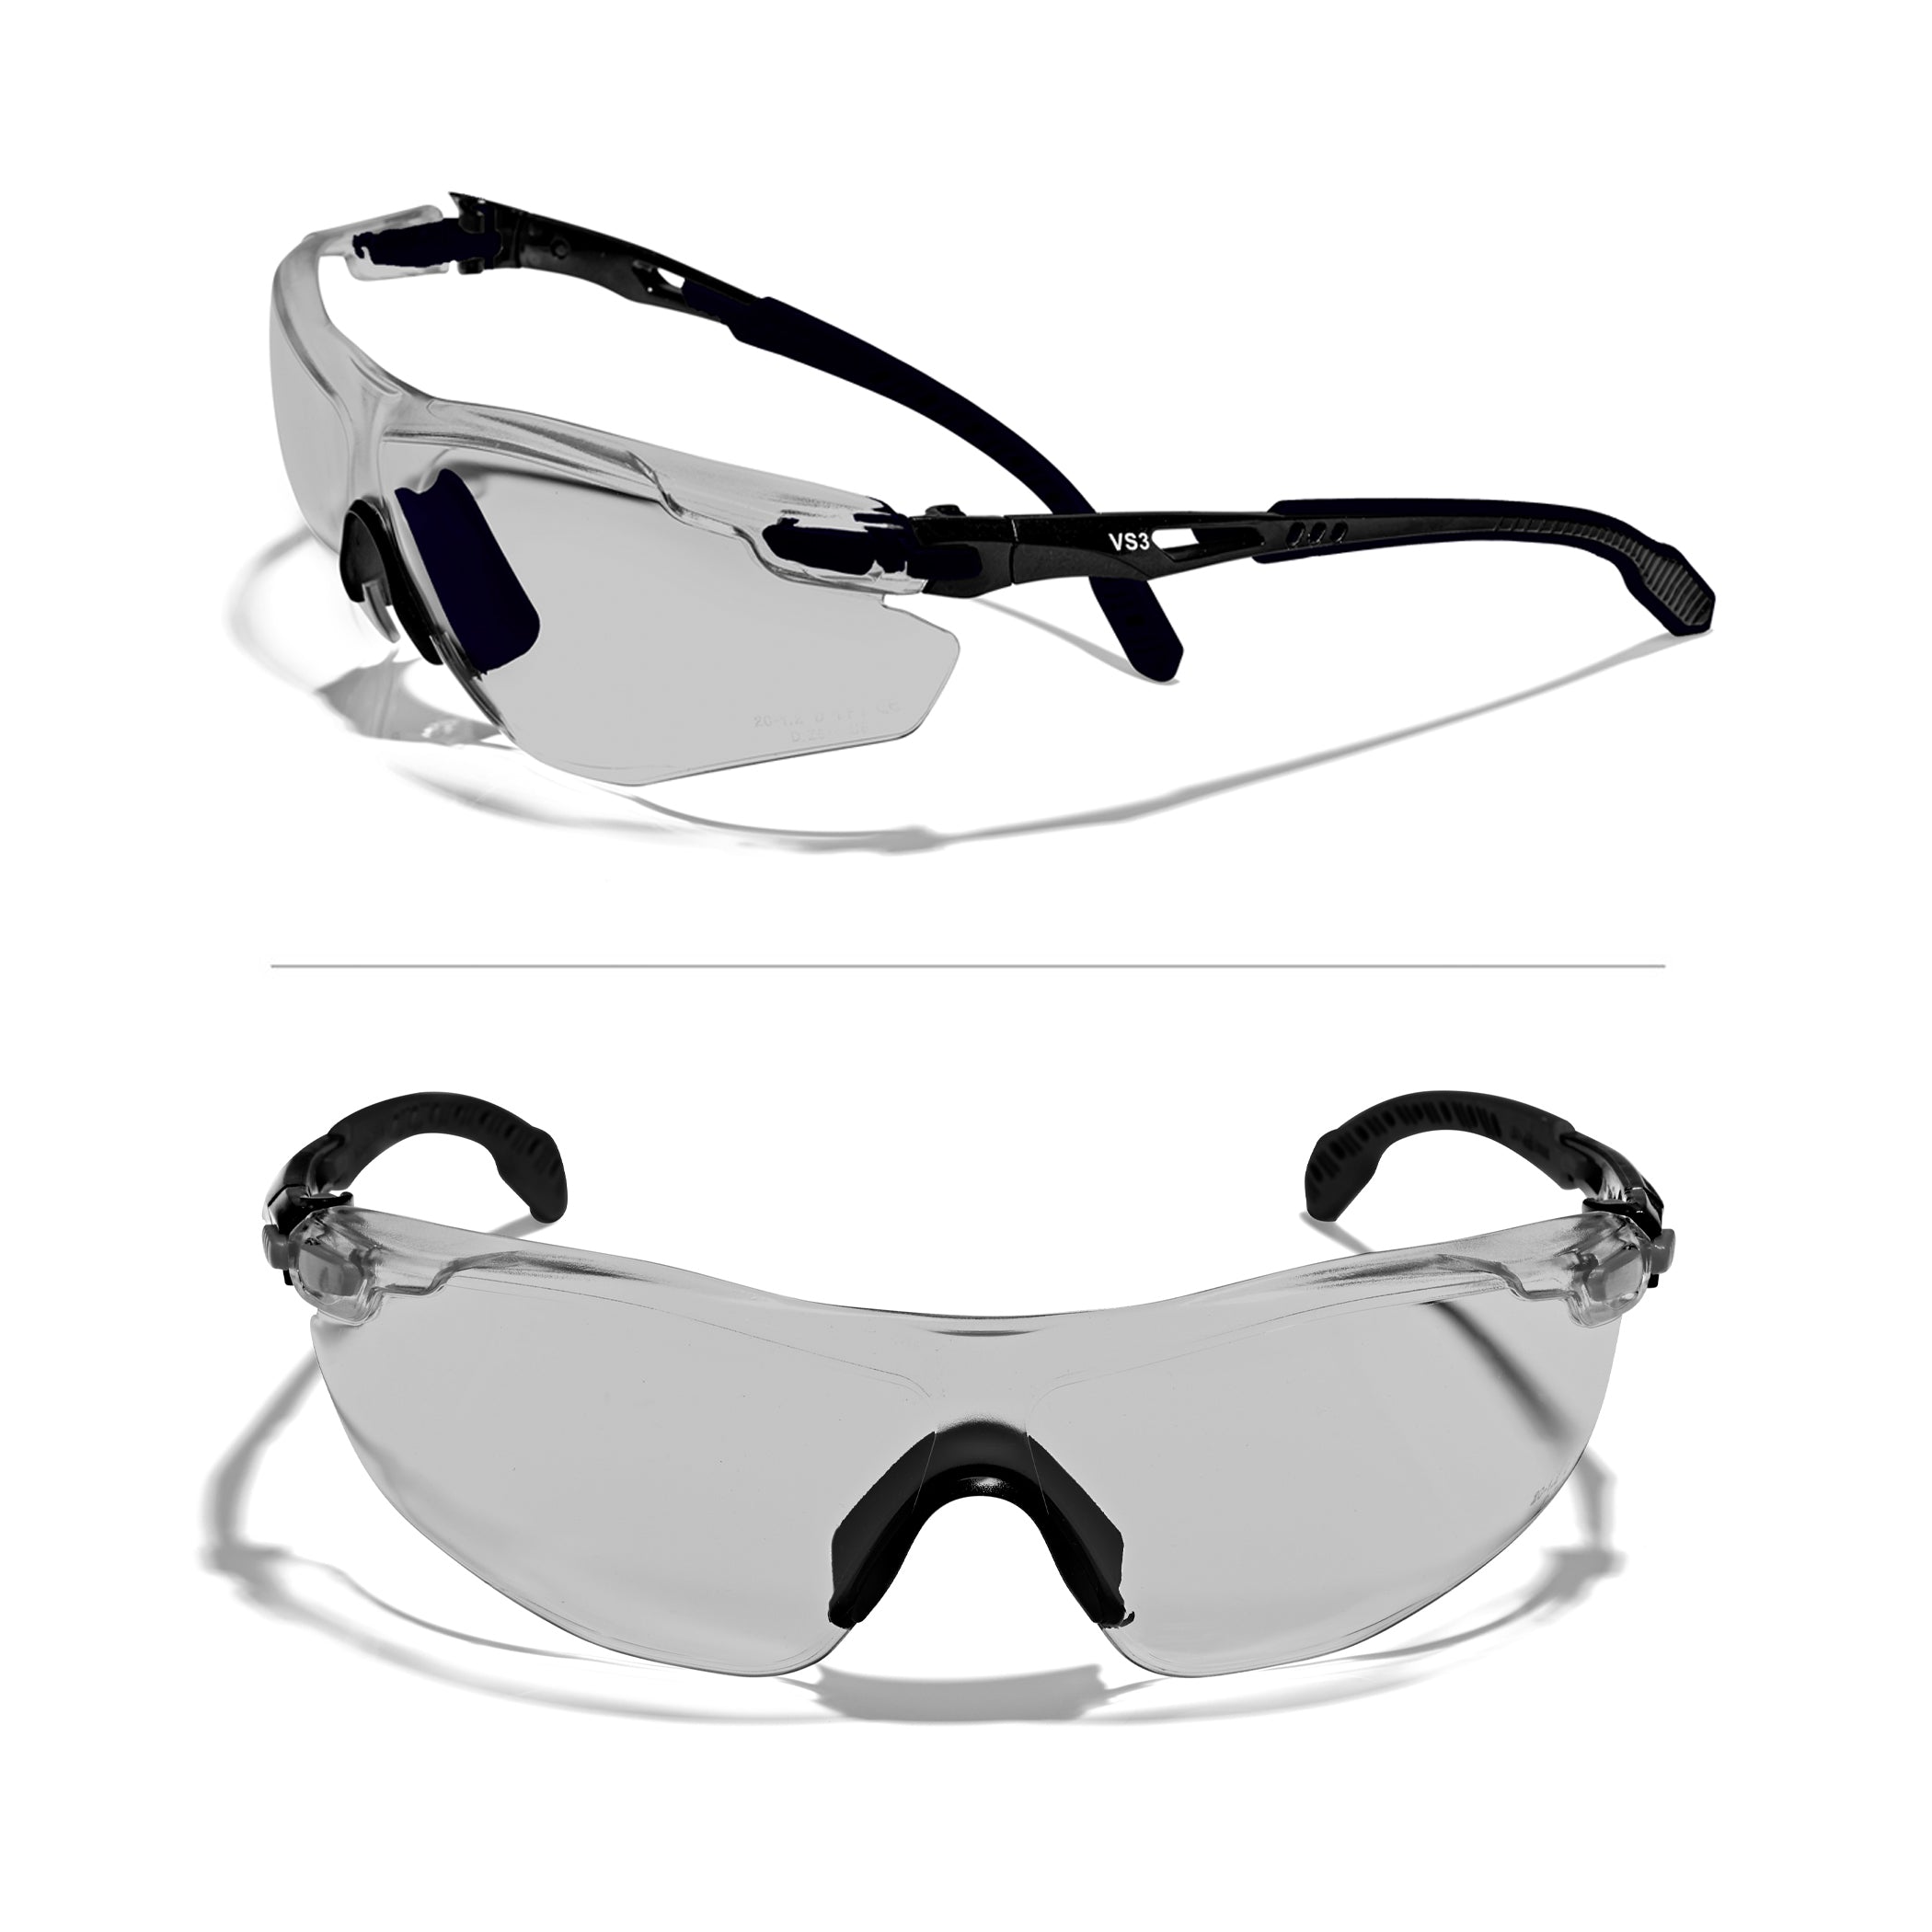 Matrix Ogden Prescription Safety & Sports Sunglasses For Men and Women --  ANSI Z87.1 Certified